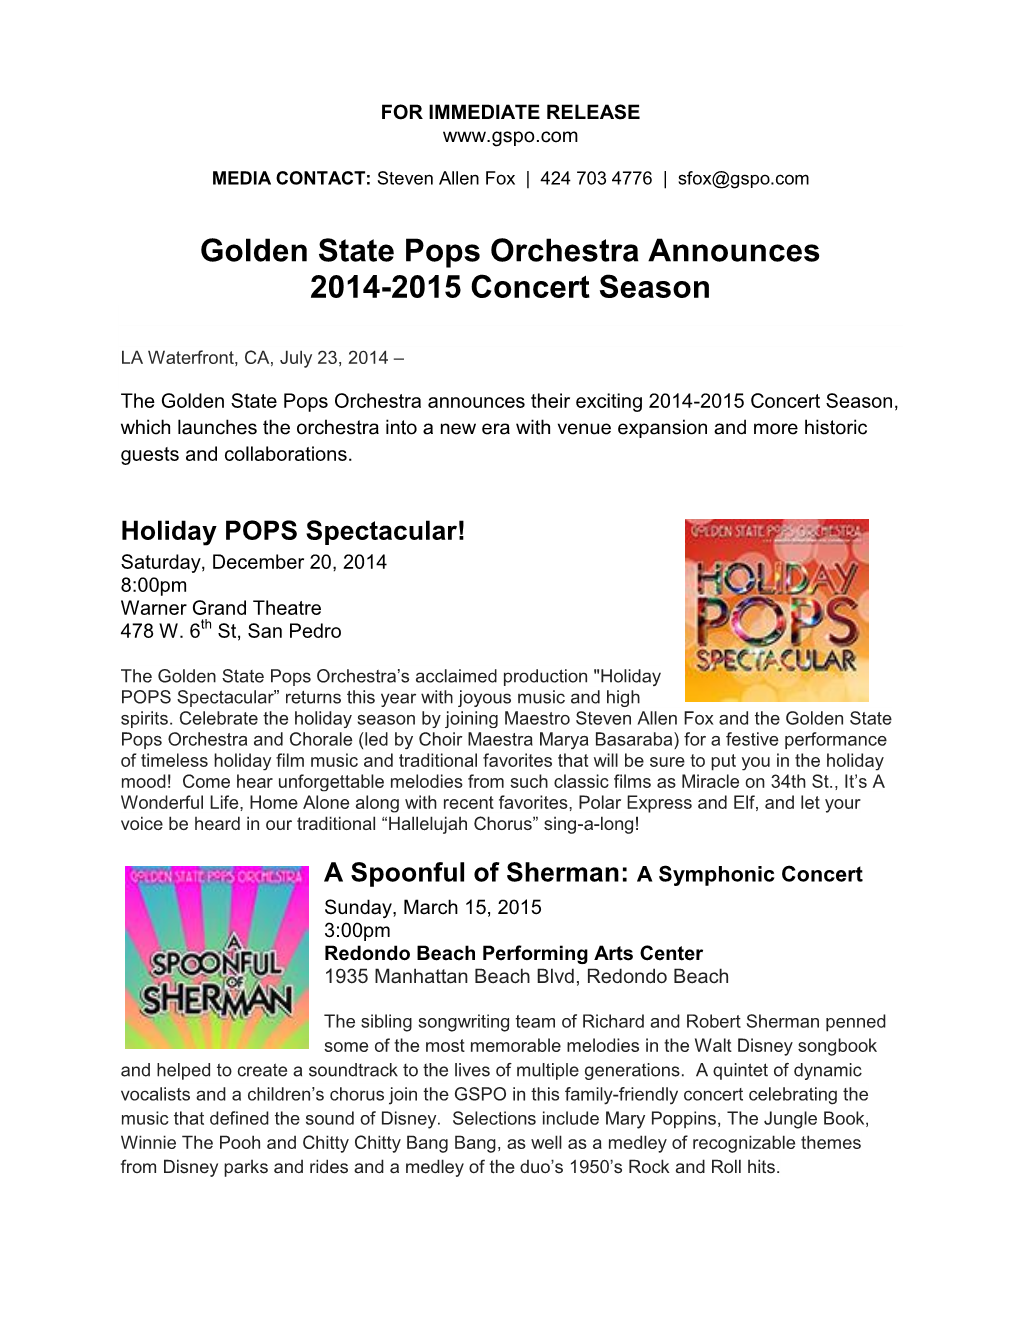 Golden State Pops Orchestra Announces 2014-2015 Concert Season